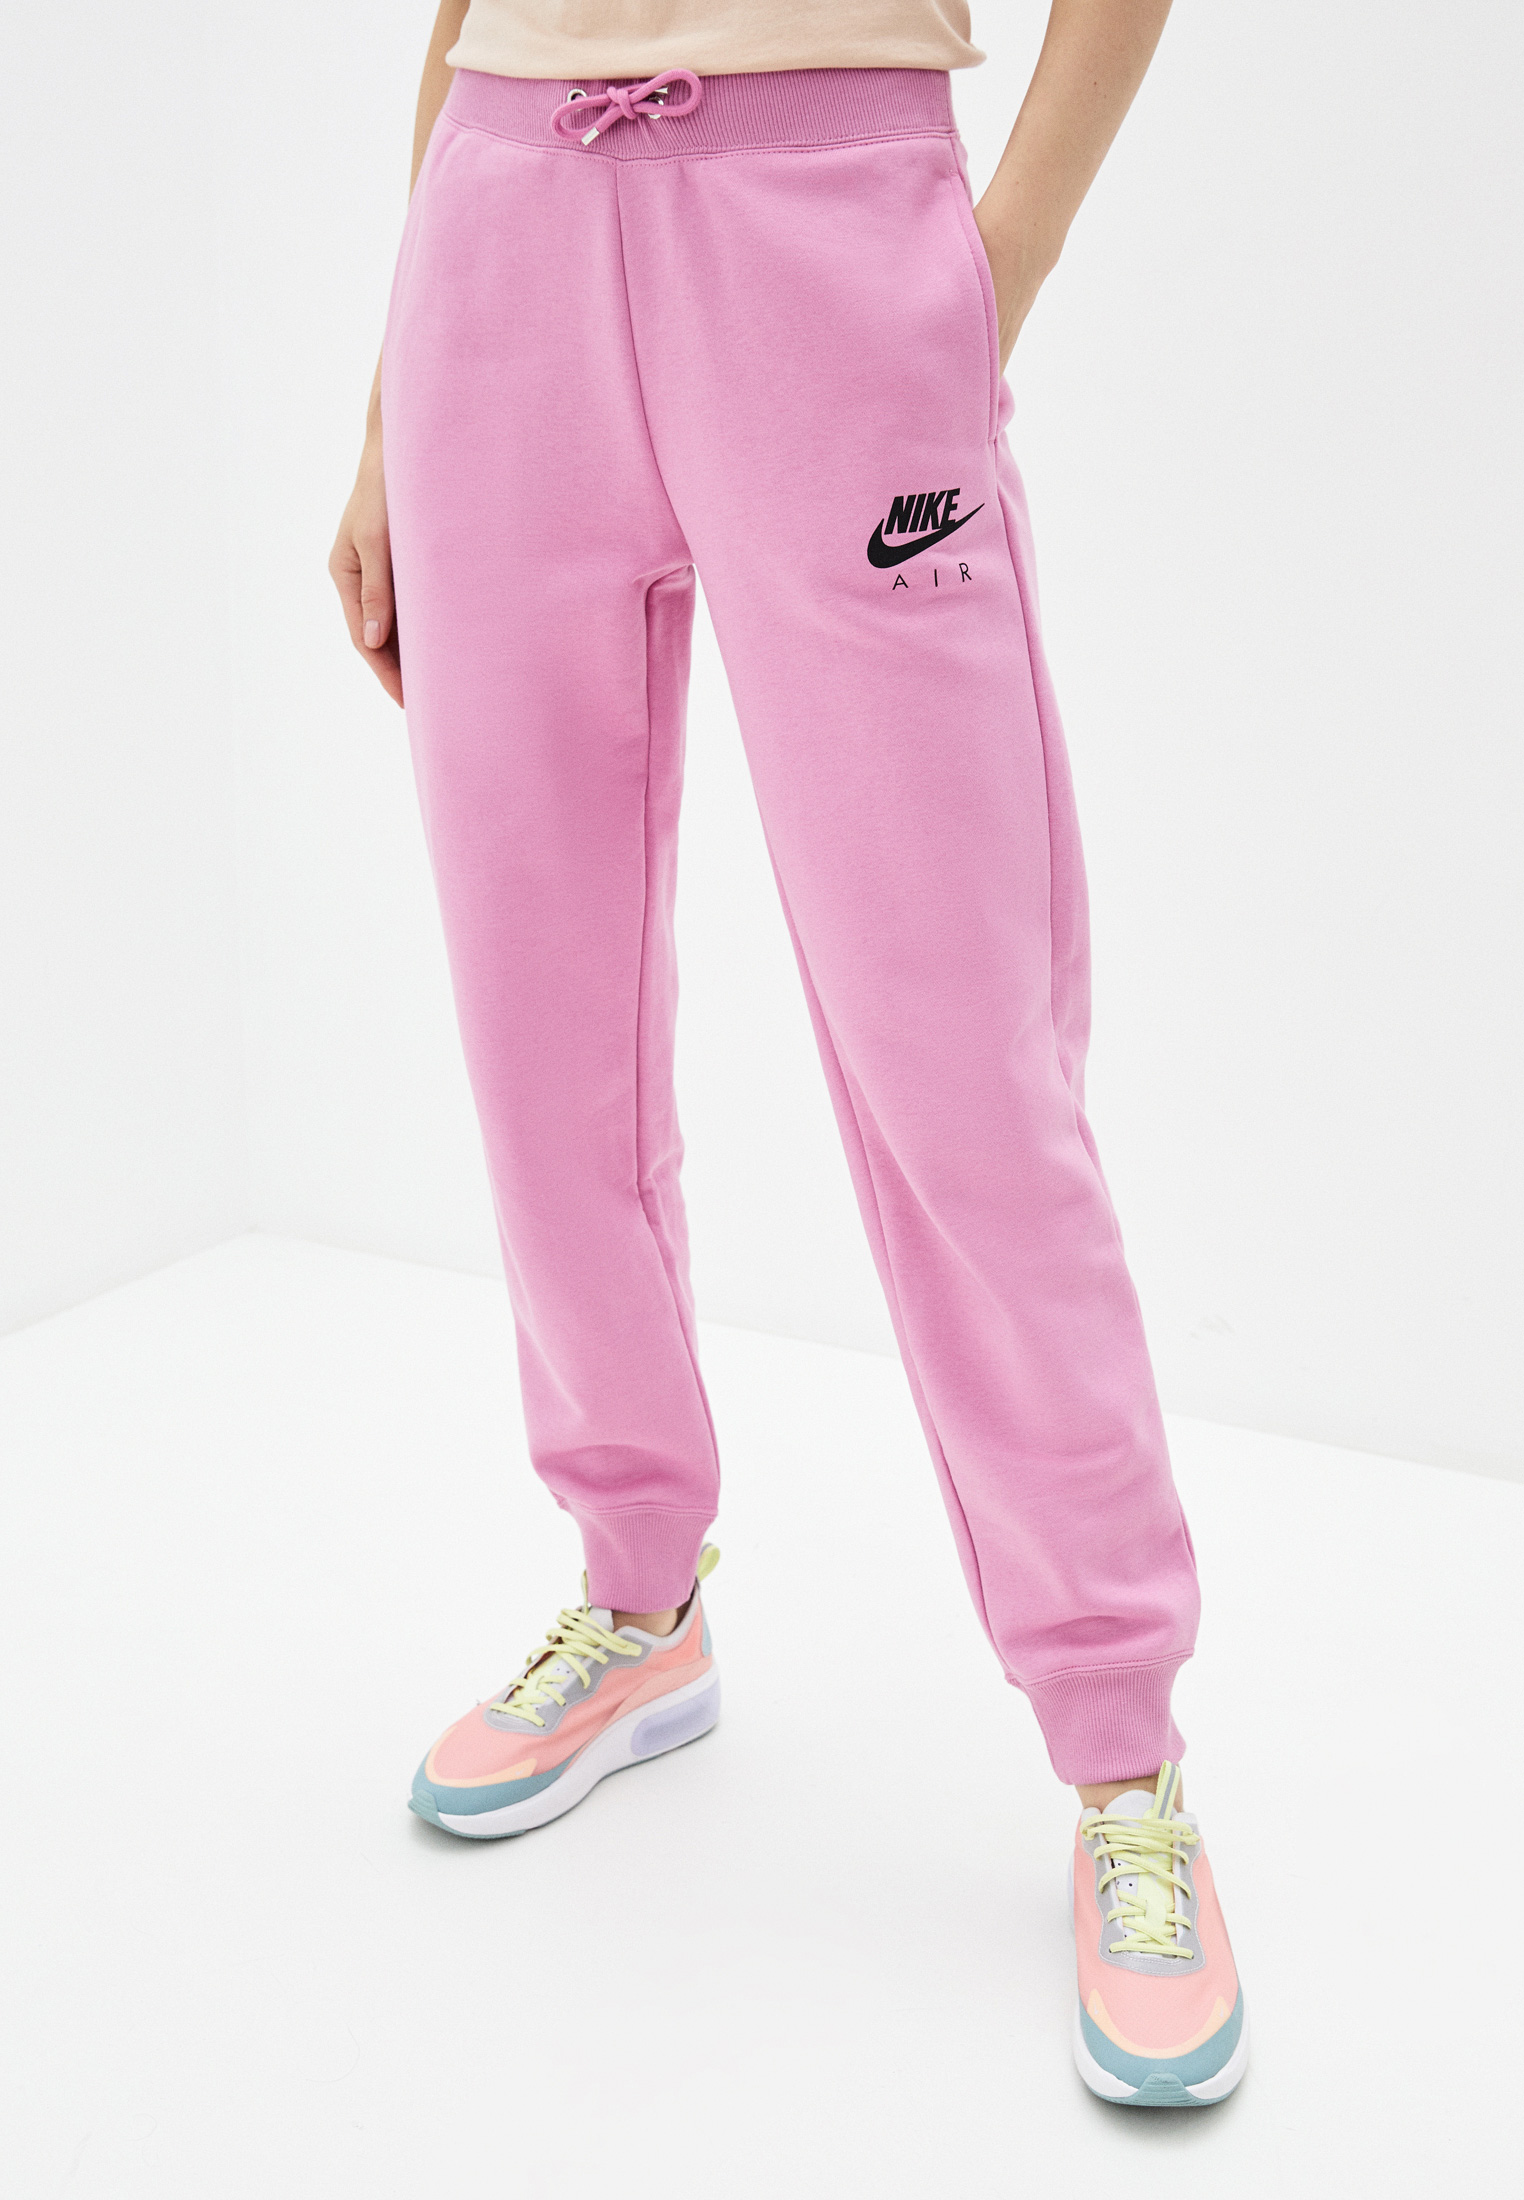 Розовое трико. W NSW Air Pant BB. Валберис спортивные брюки женские 7/8. Nike w NSW Pant pk. Штаны на валберис розовые.